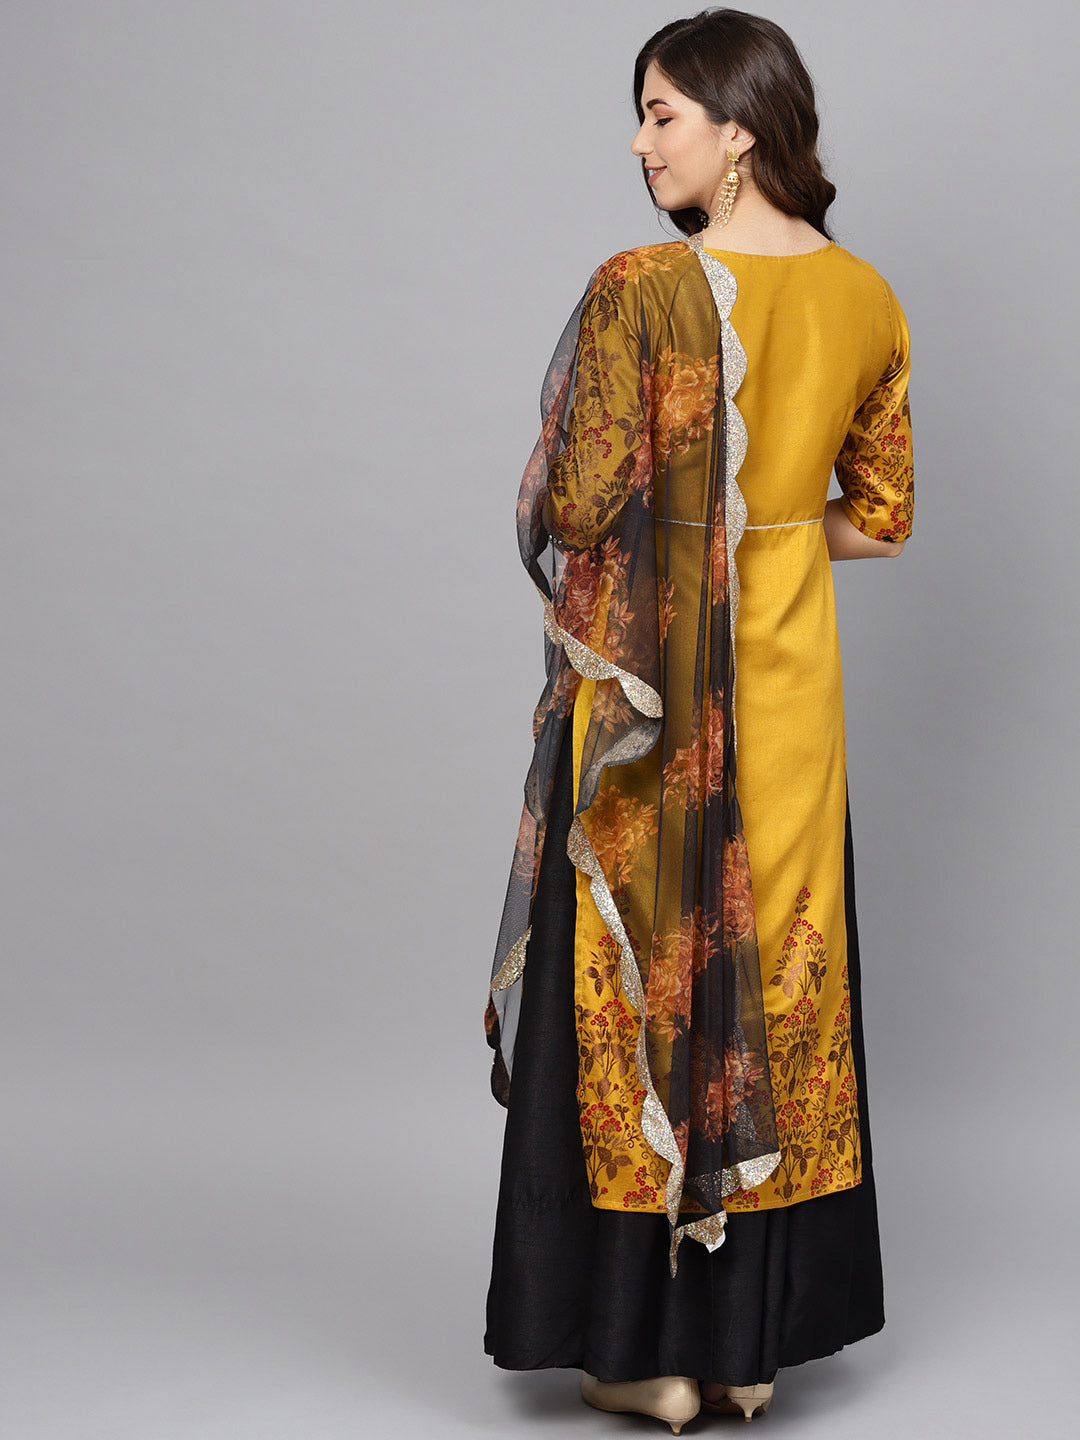 Stylish Ethnic Bottomwear Designs For Kurta Suit Combos